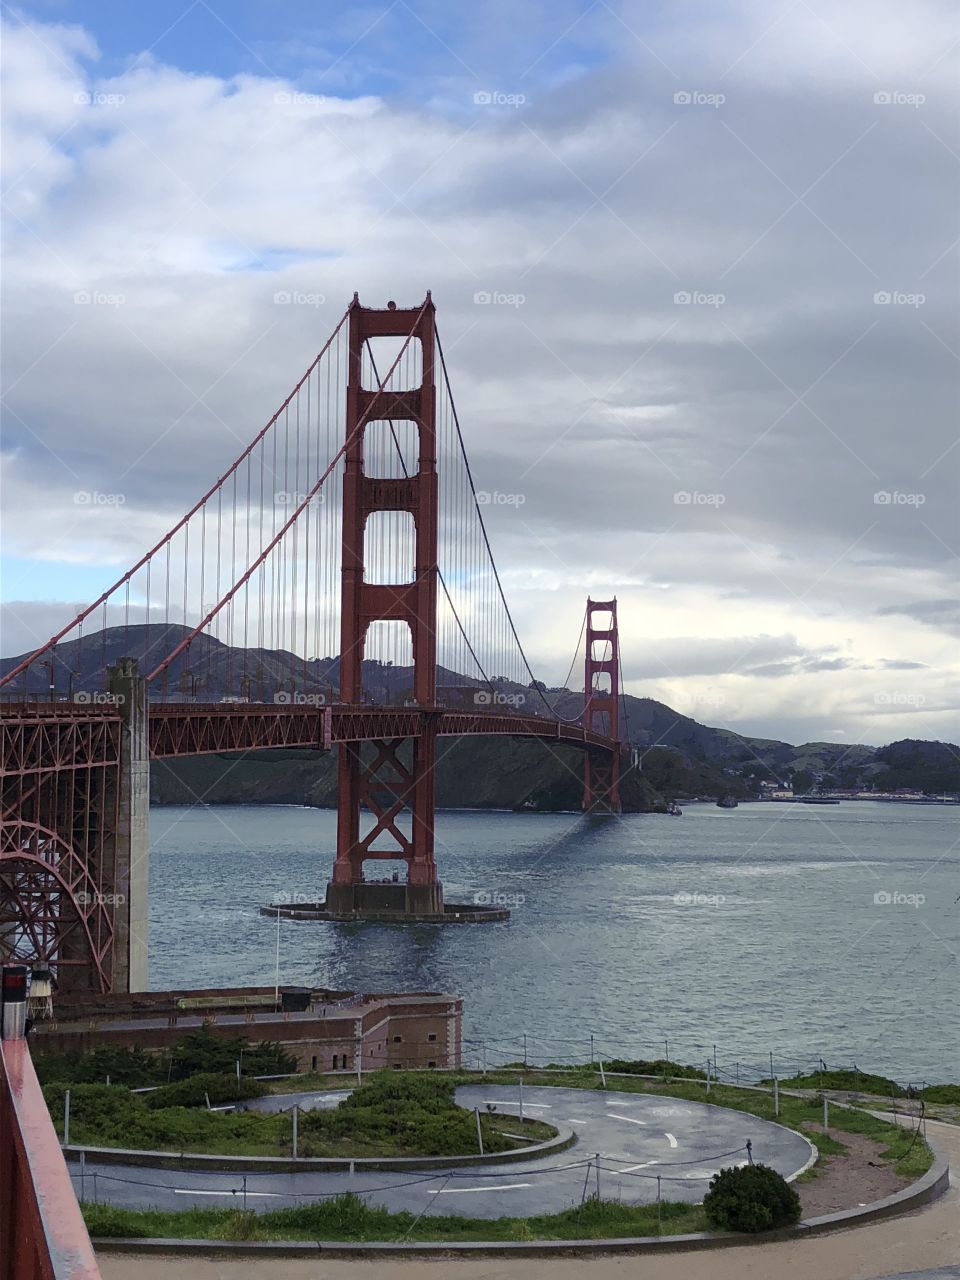 A picture of the Golden Gate Bridge in San Francisco, California.